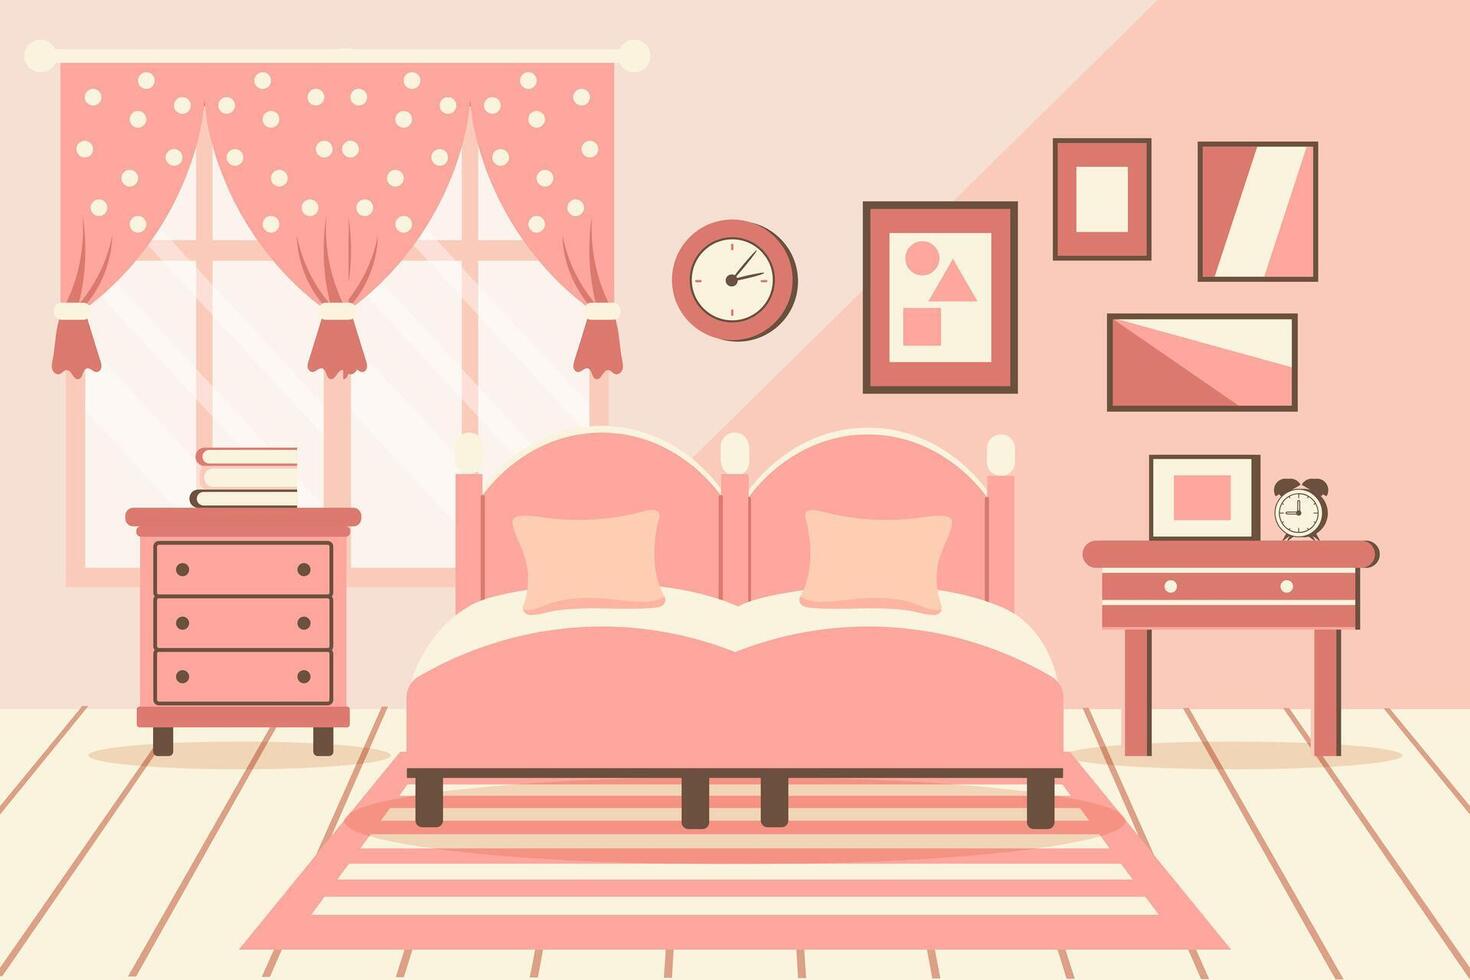 Cozy bedroom. Bedroom interior bed with pillows, carpet, bedside tables, wardrobe, window. Interior concept. Flat illustration. Vector